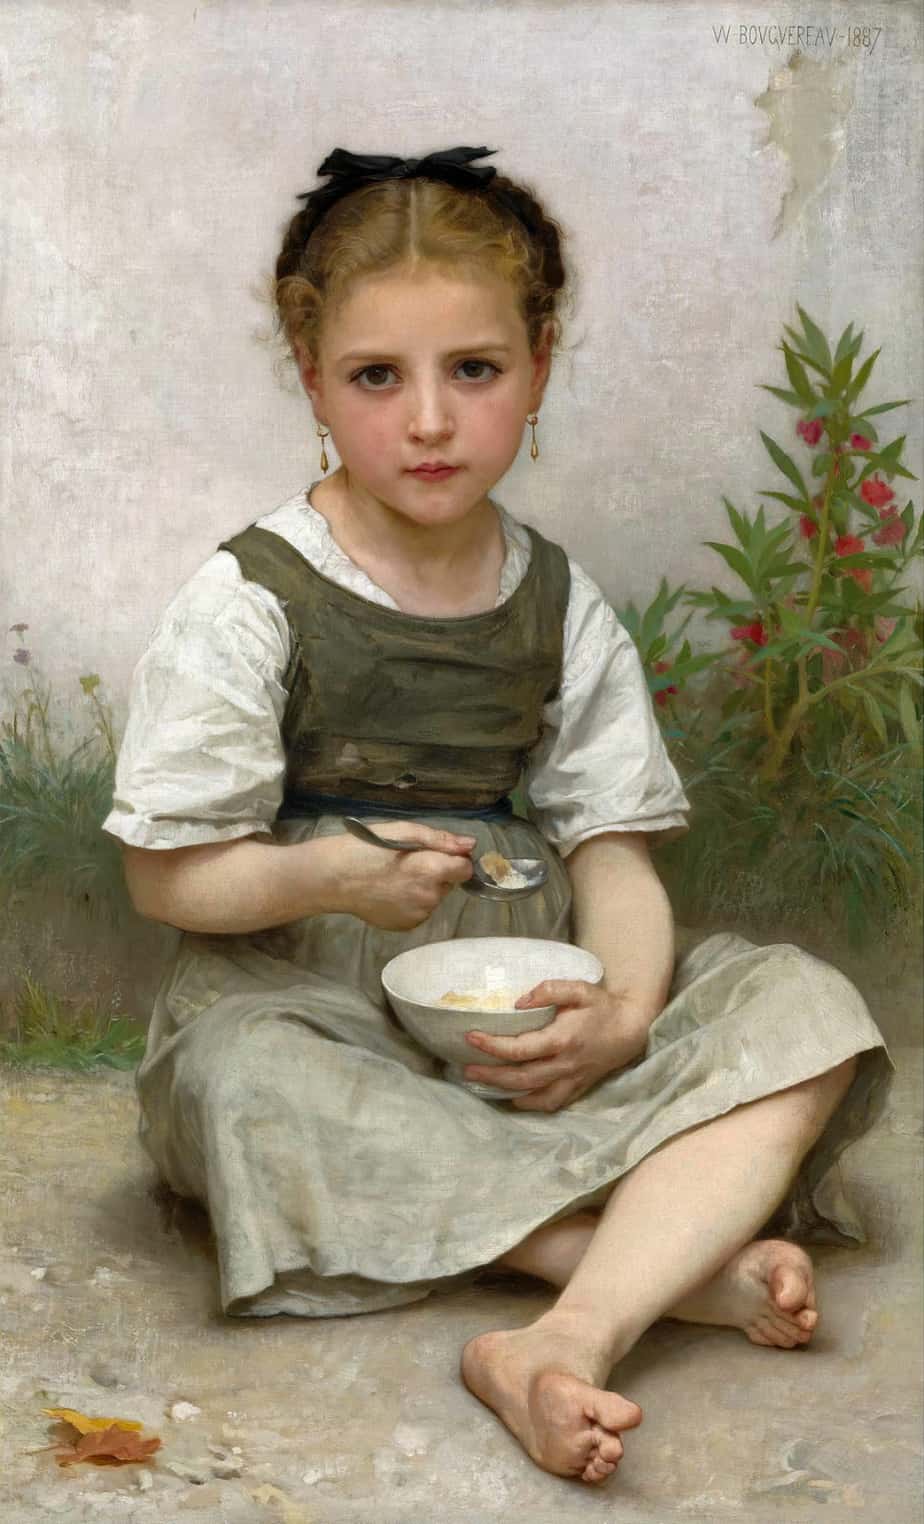 William Bouguereau - Breakfast 1887